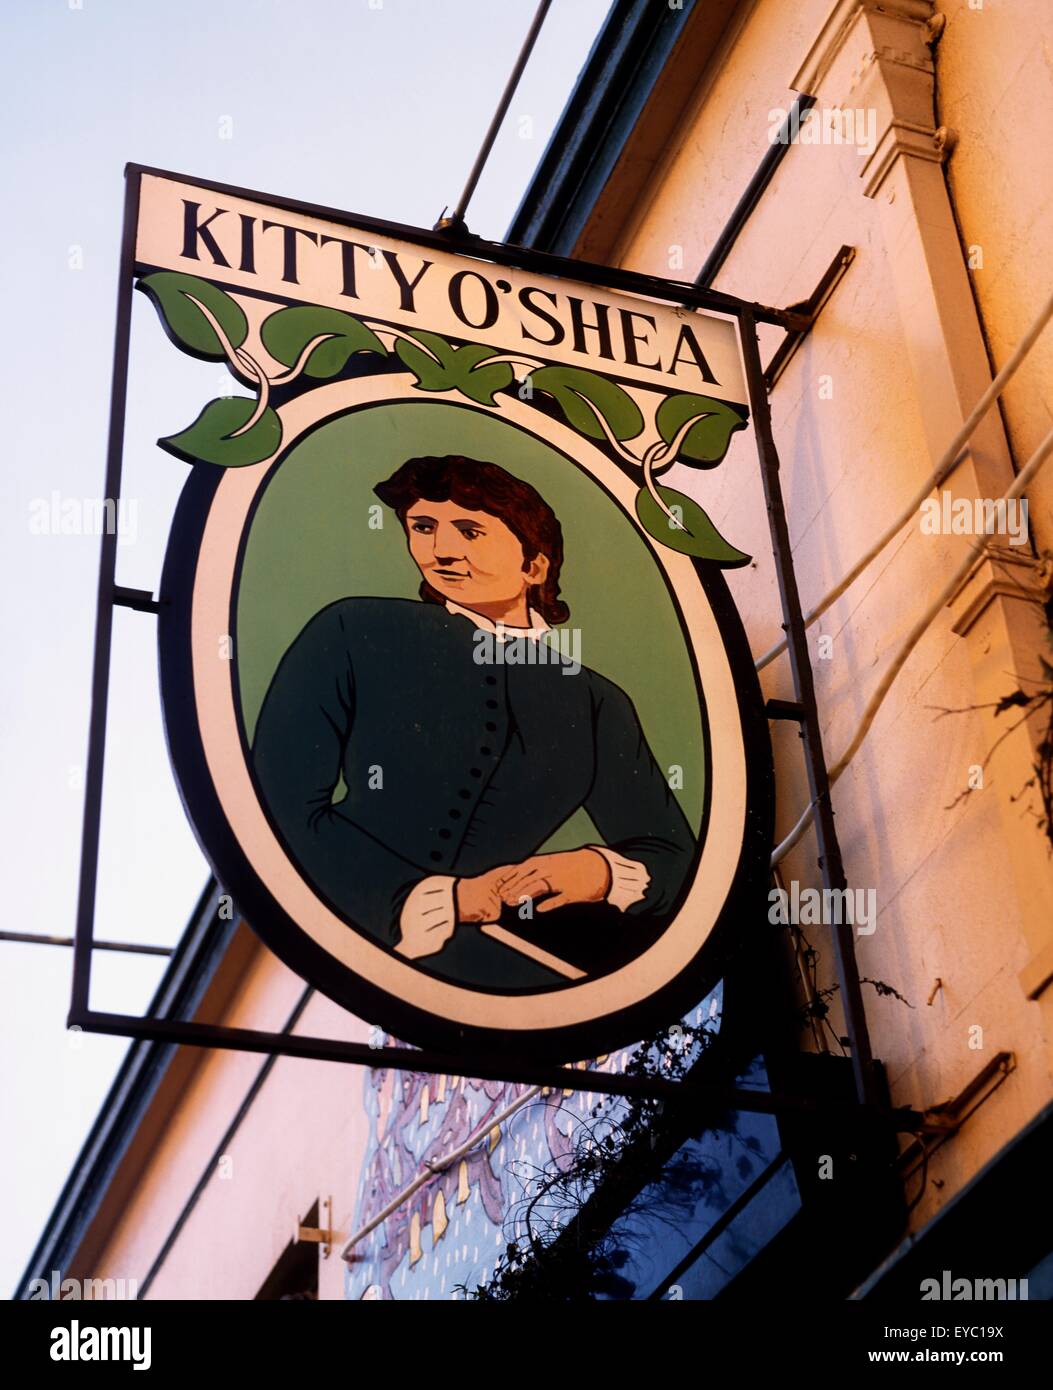 Kitty O'shea, Dublin, Co Dublin, Ireland; Pub Sign Stock Photo